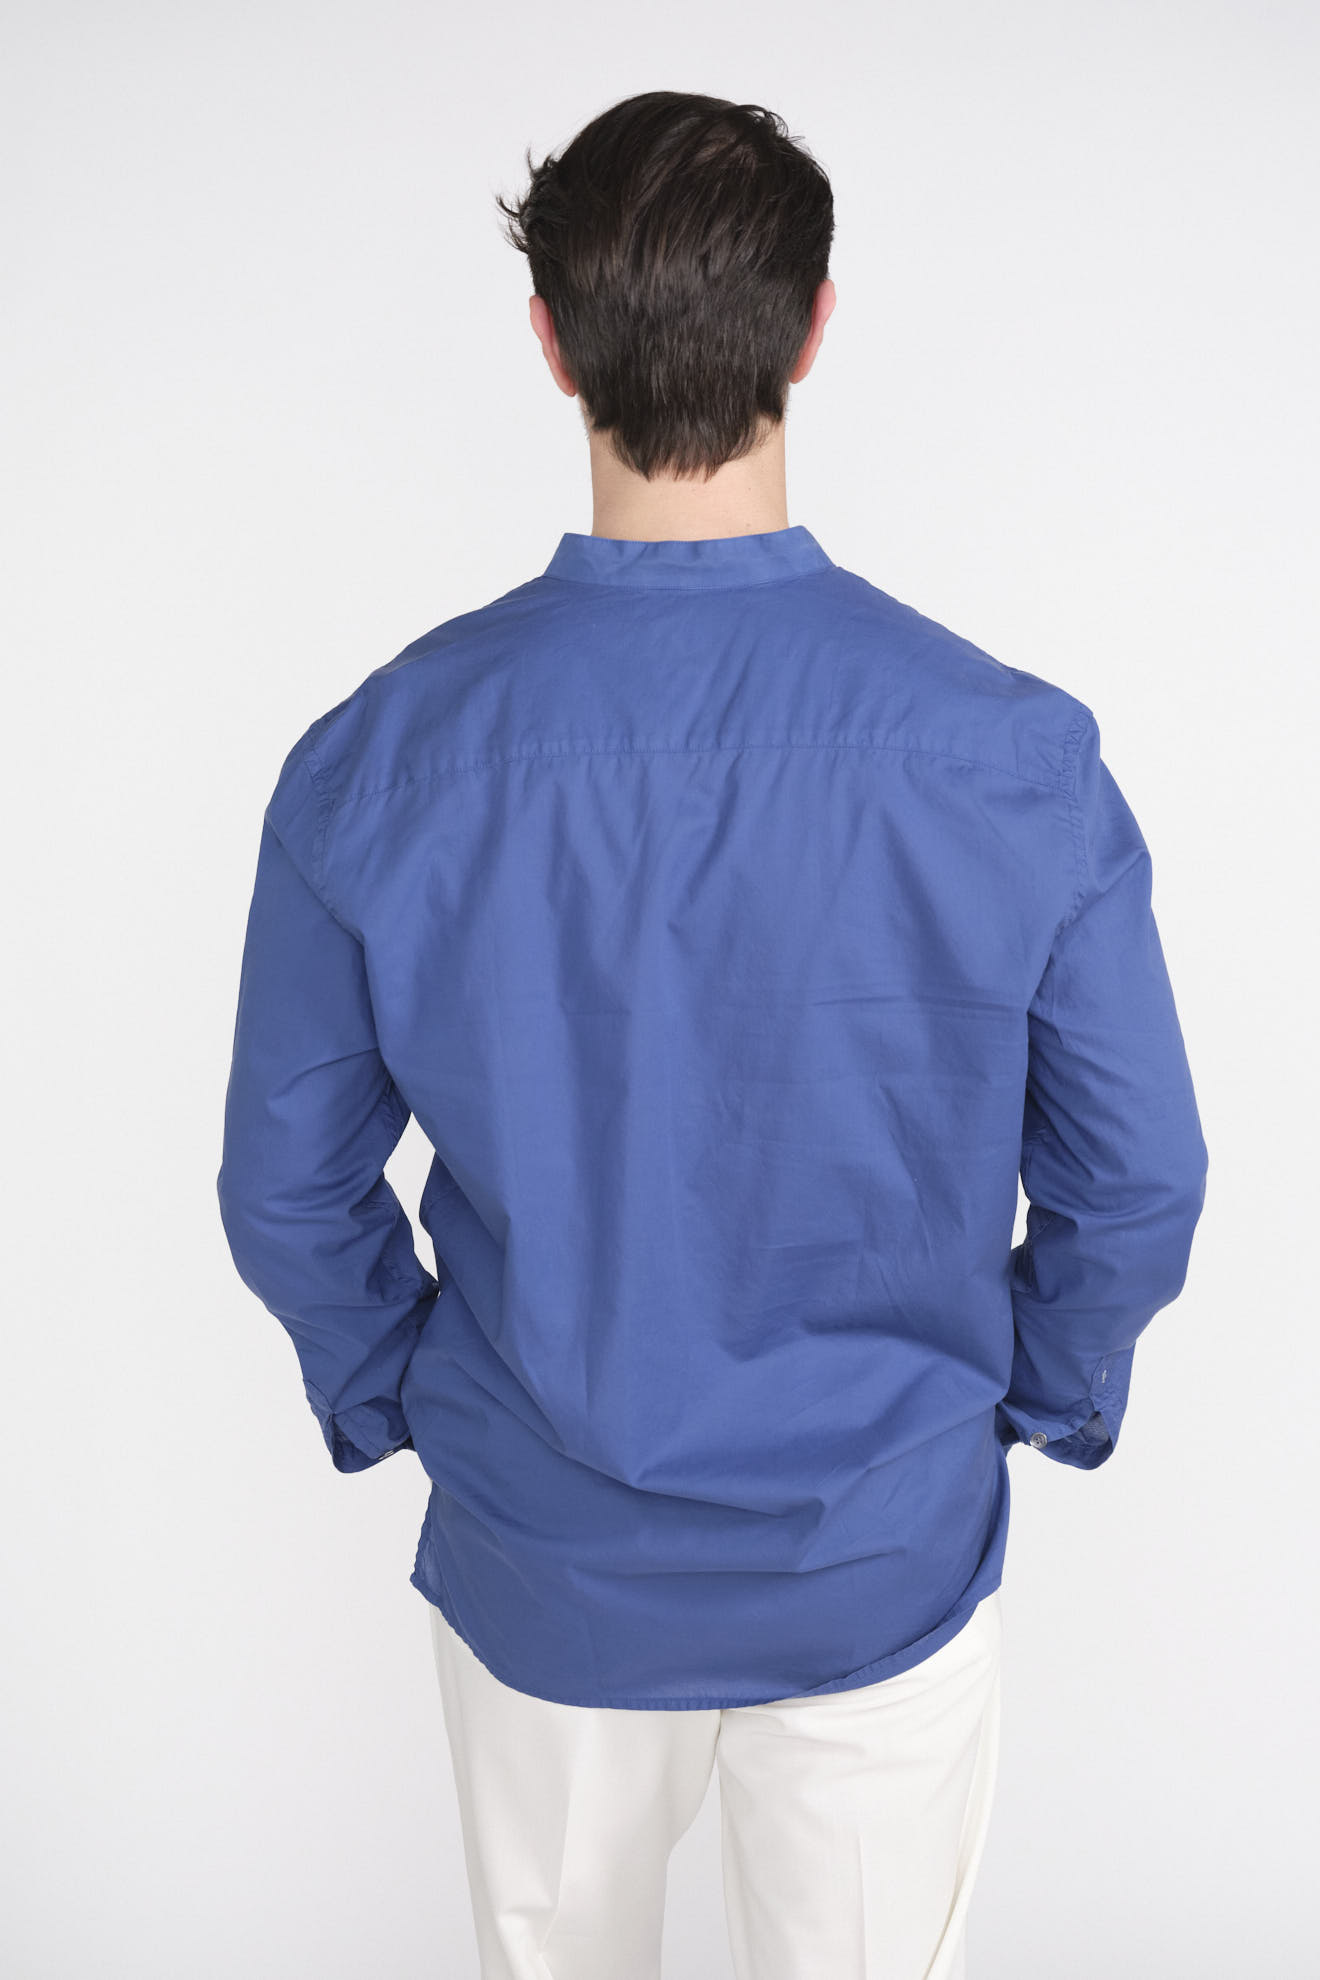 Cotton long sleeve button front shirt blue M